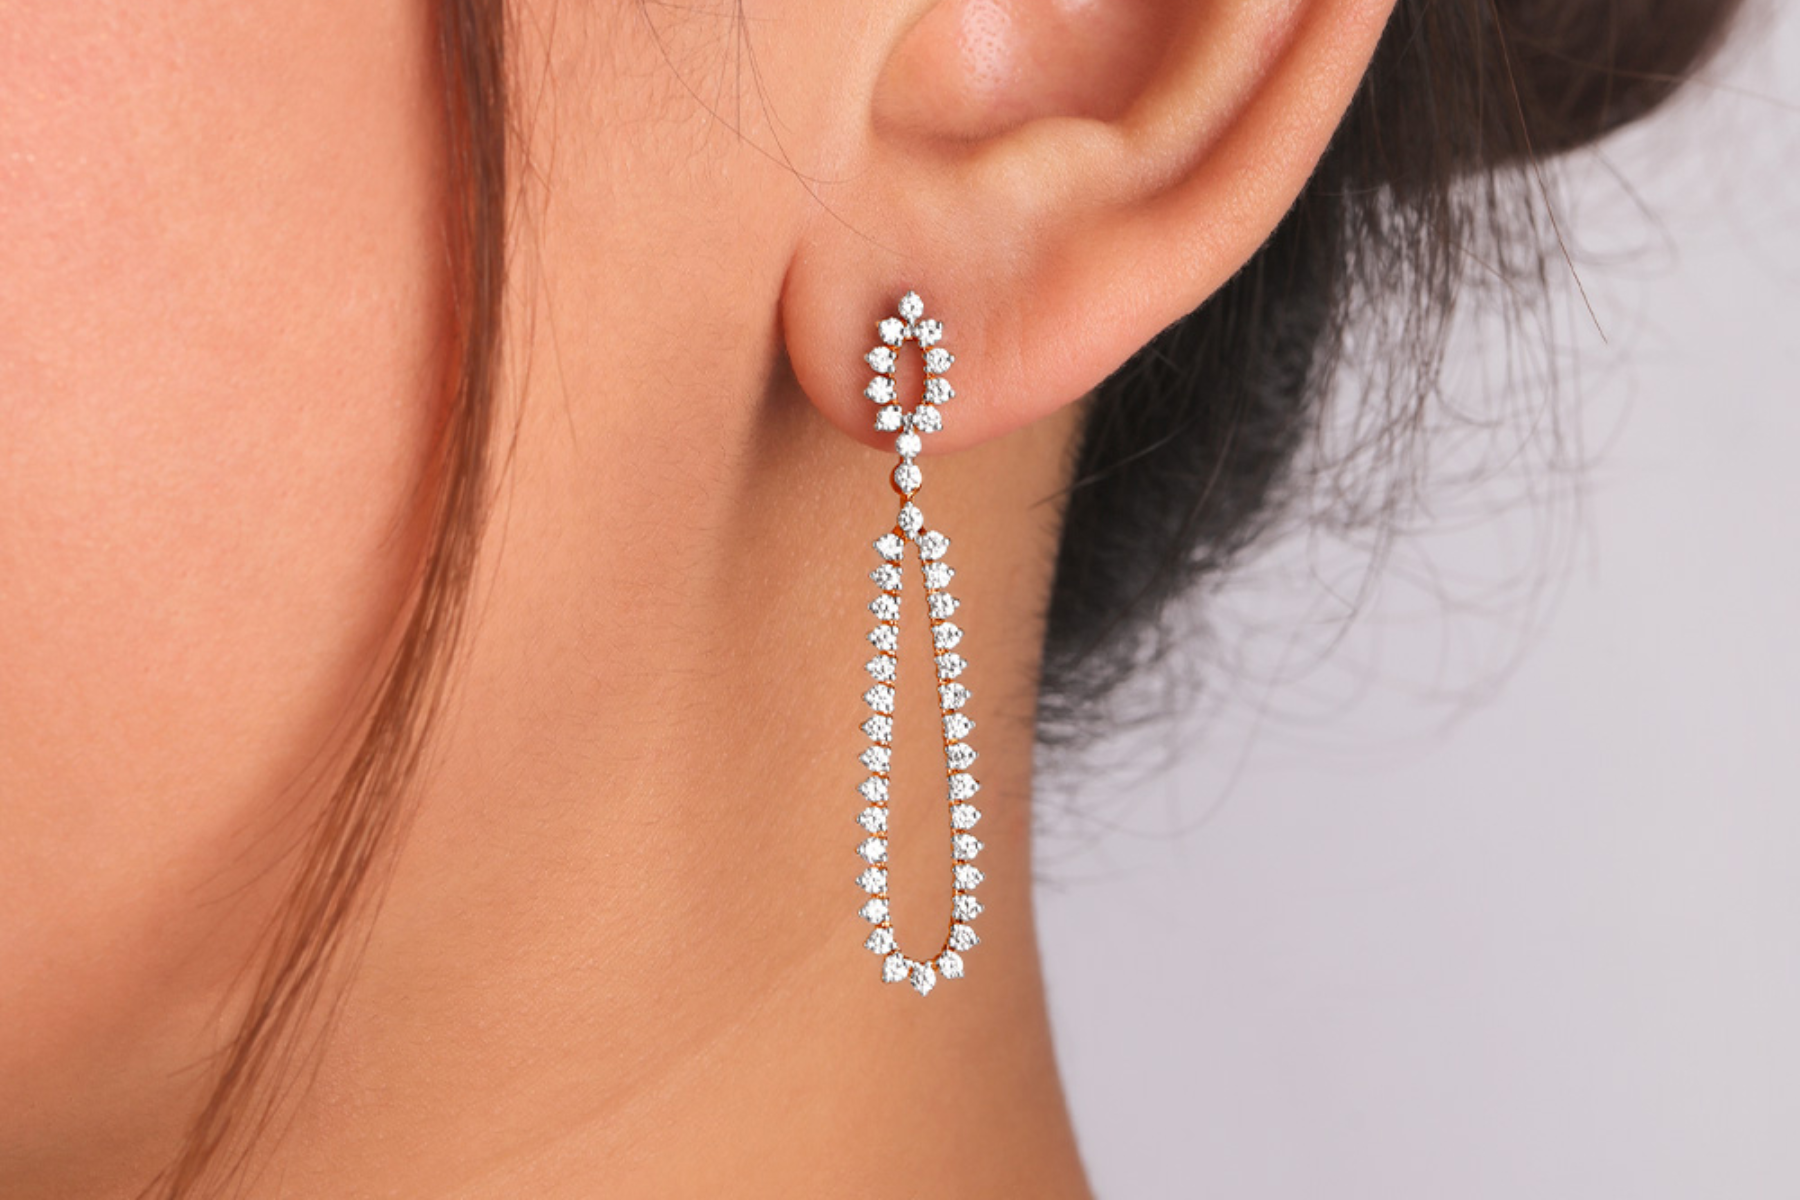 A woman's ear with a diamond drop earring